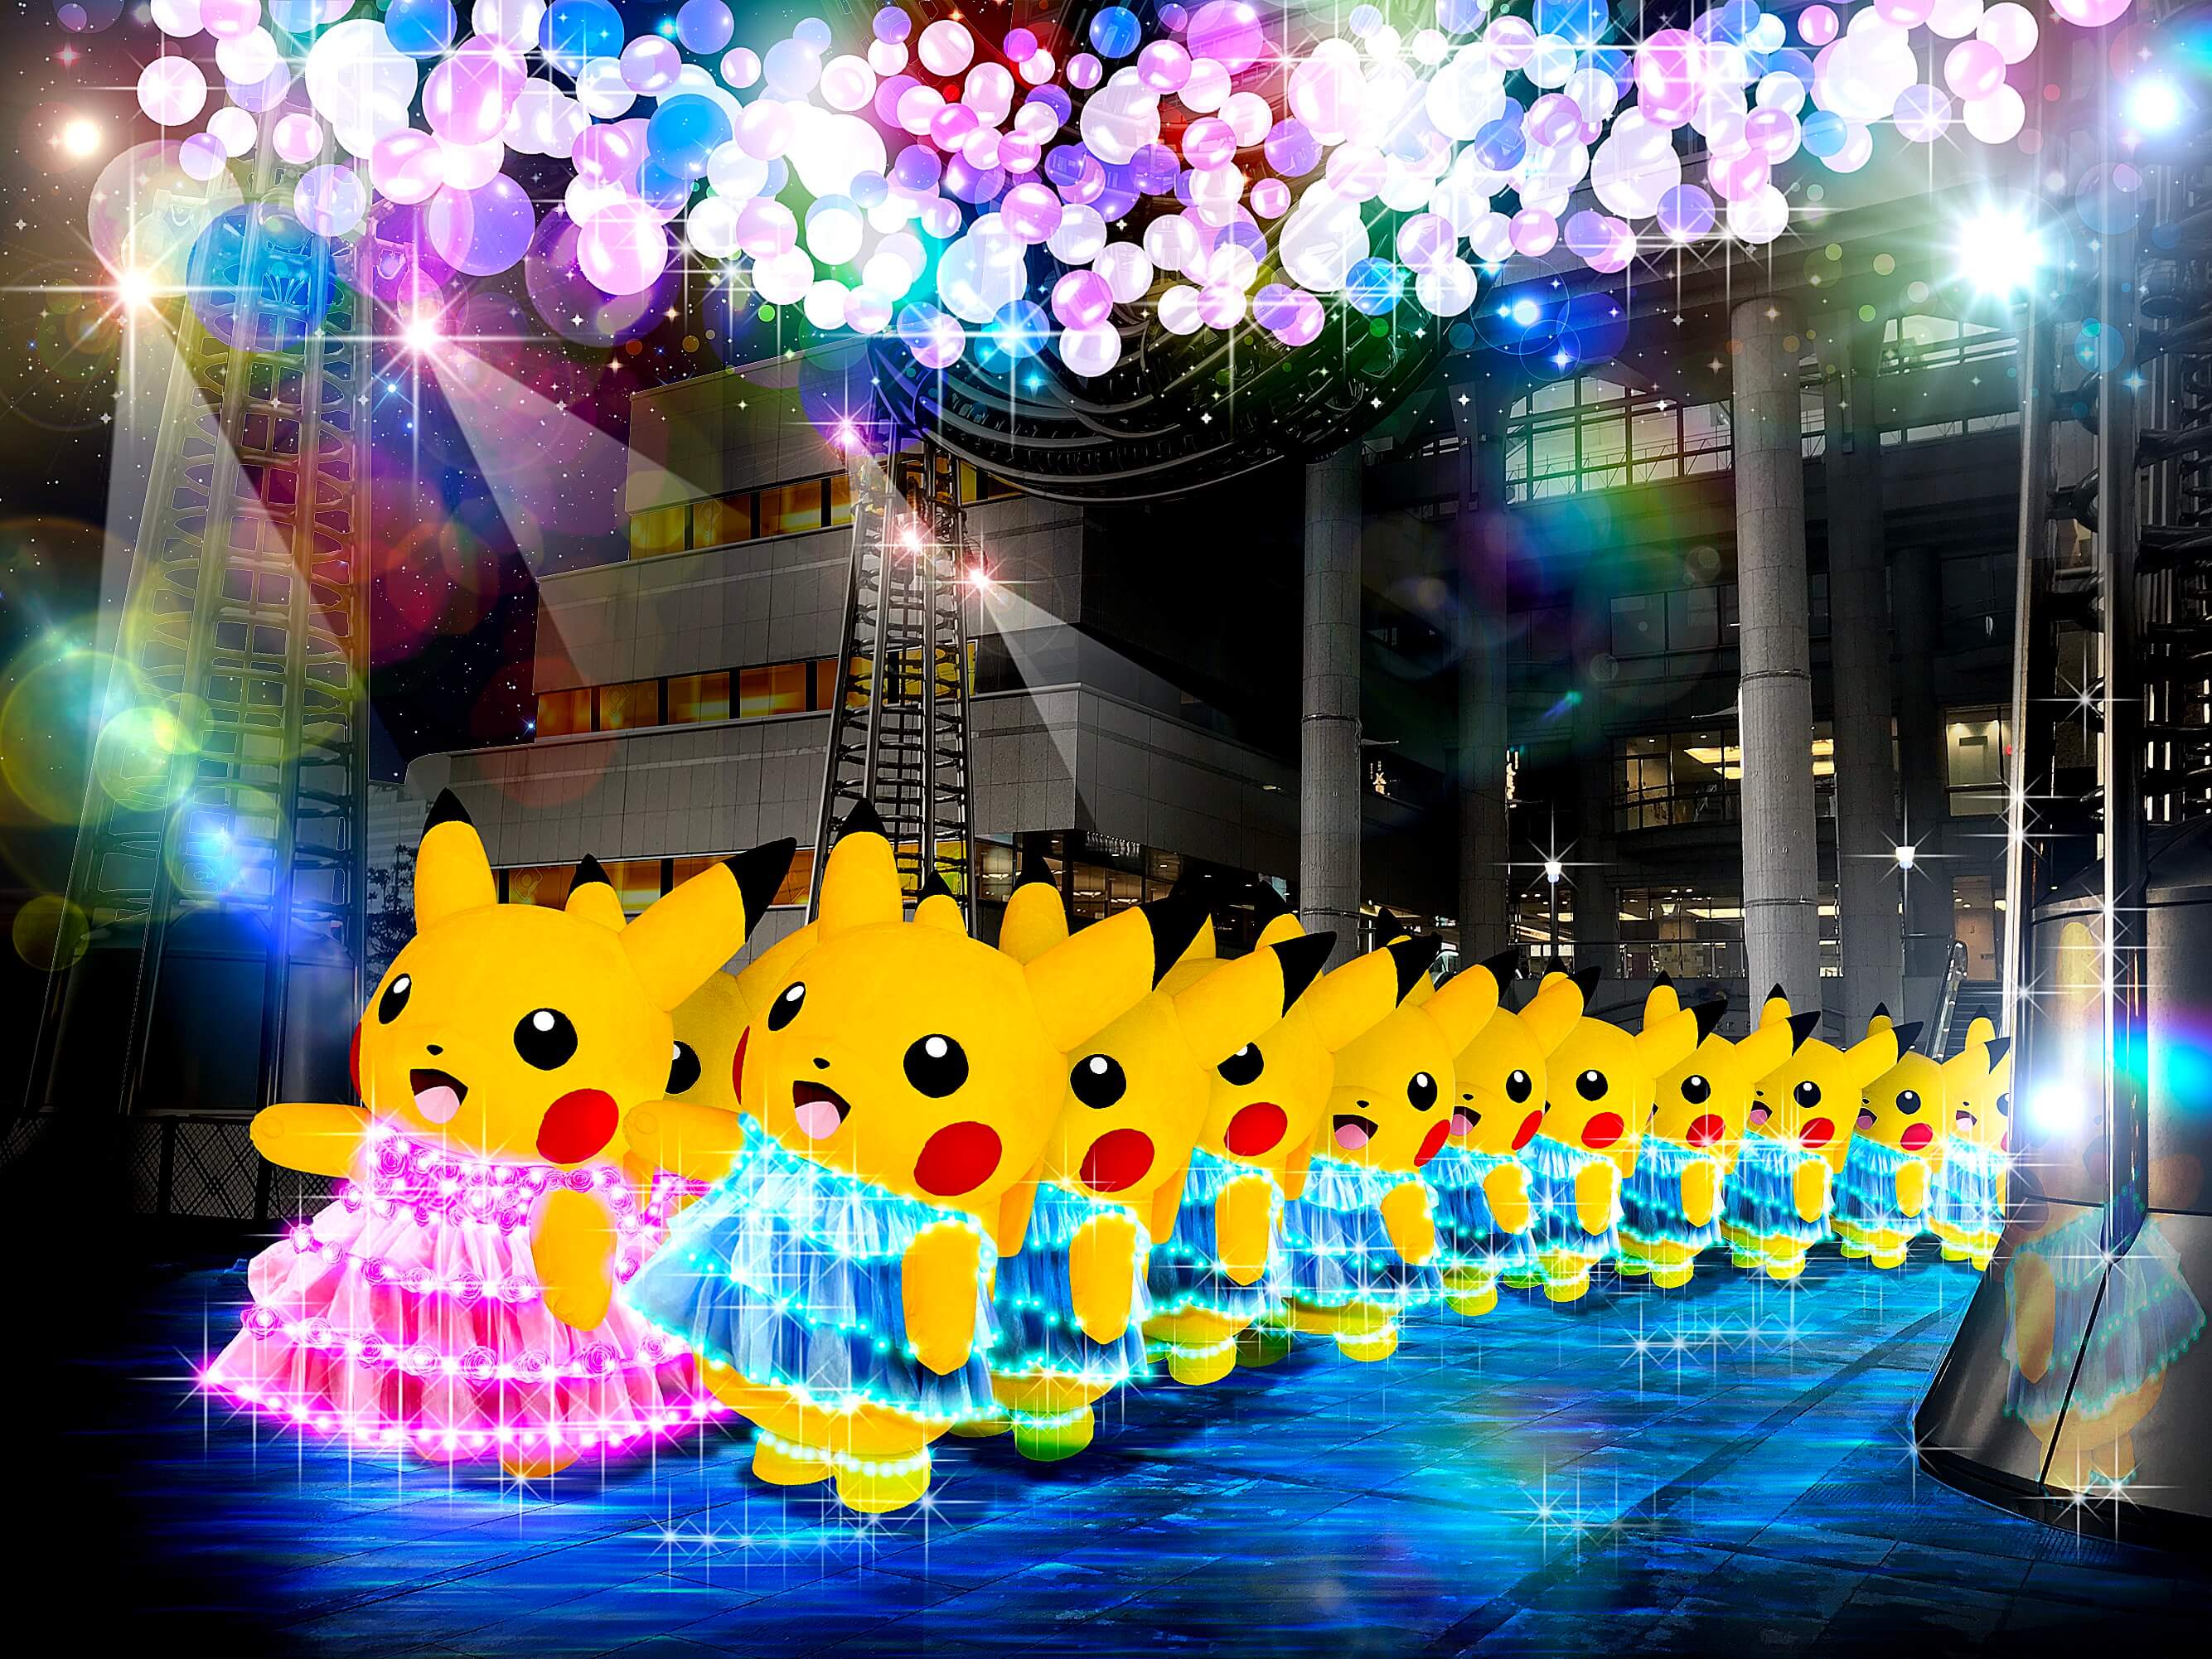 Over 1,500 Pikachu to Parade at Yokohama's 2018 